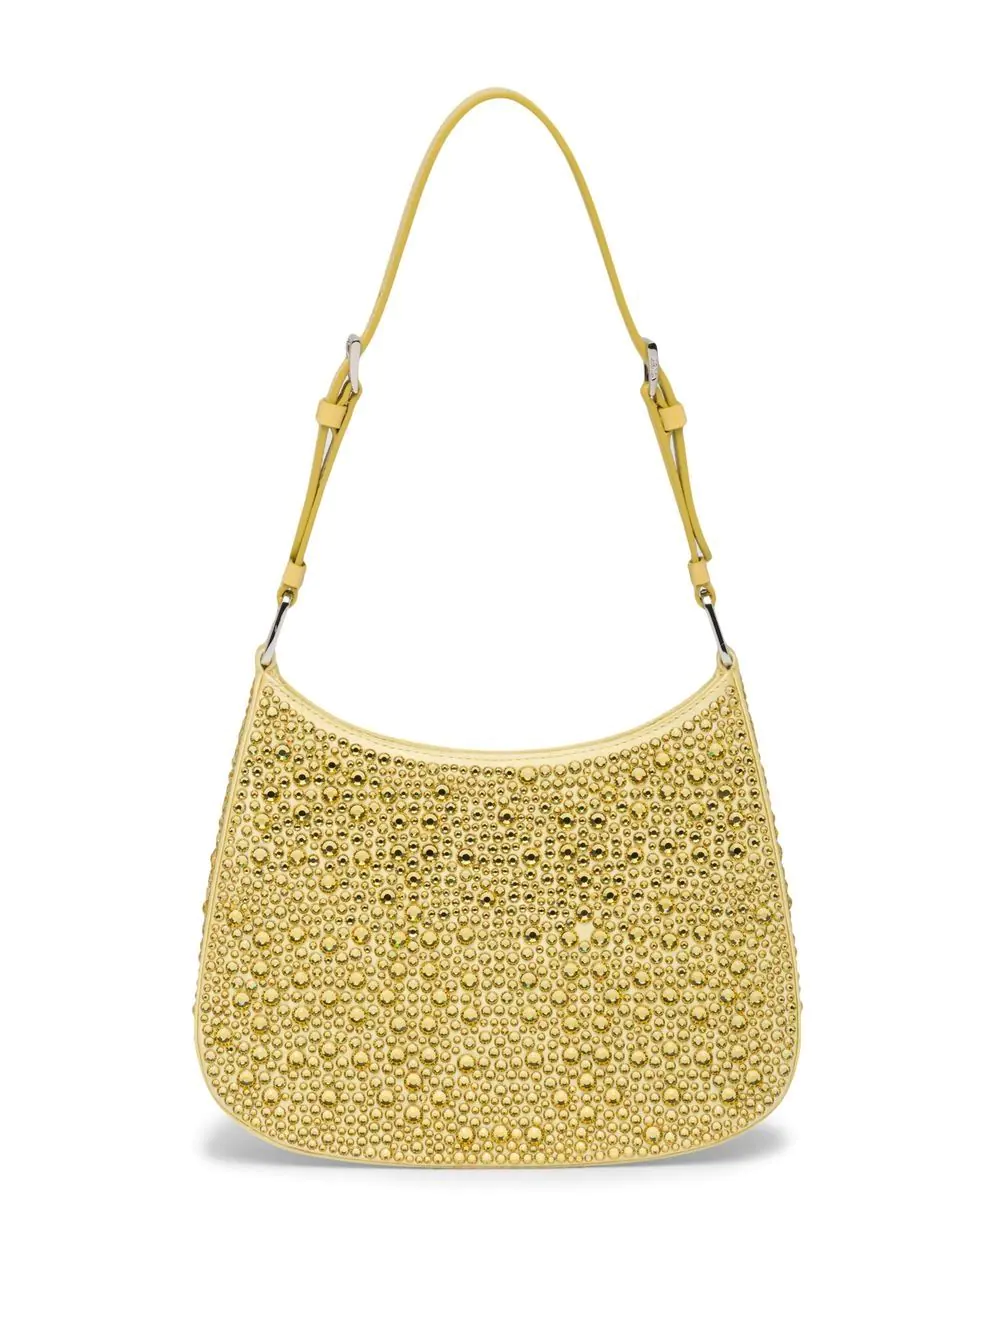 Introducing Prada Cleo Bag - Glam & Glitter